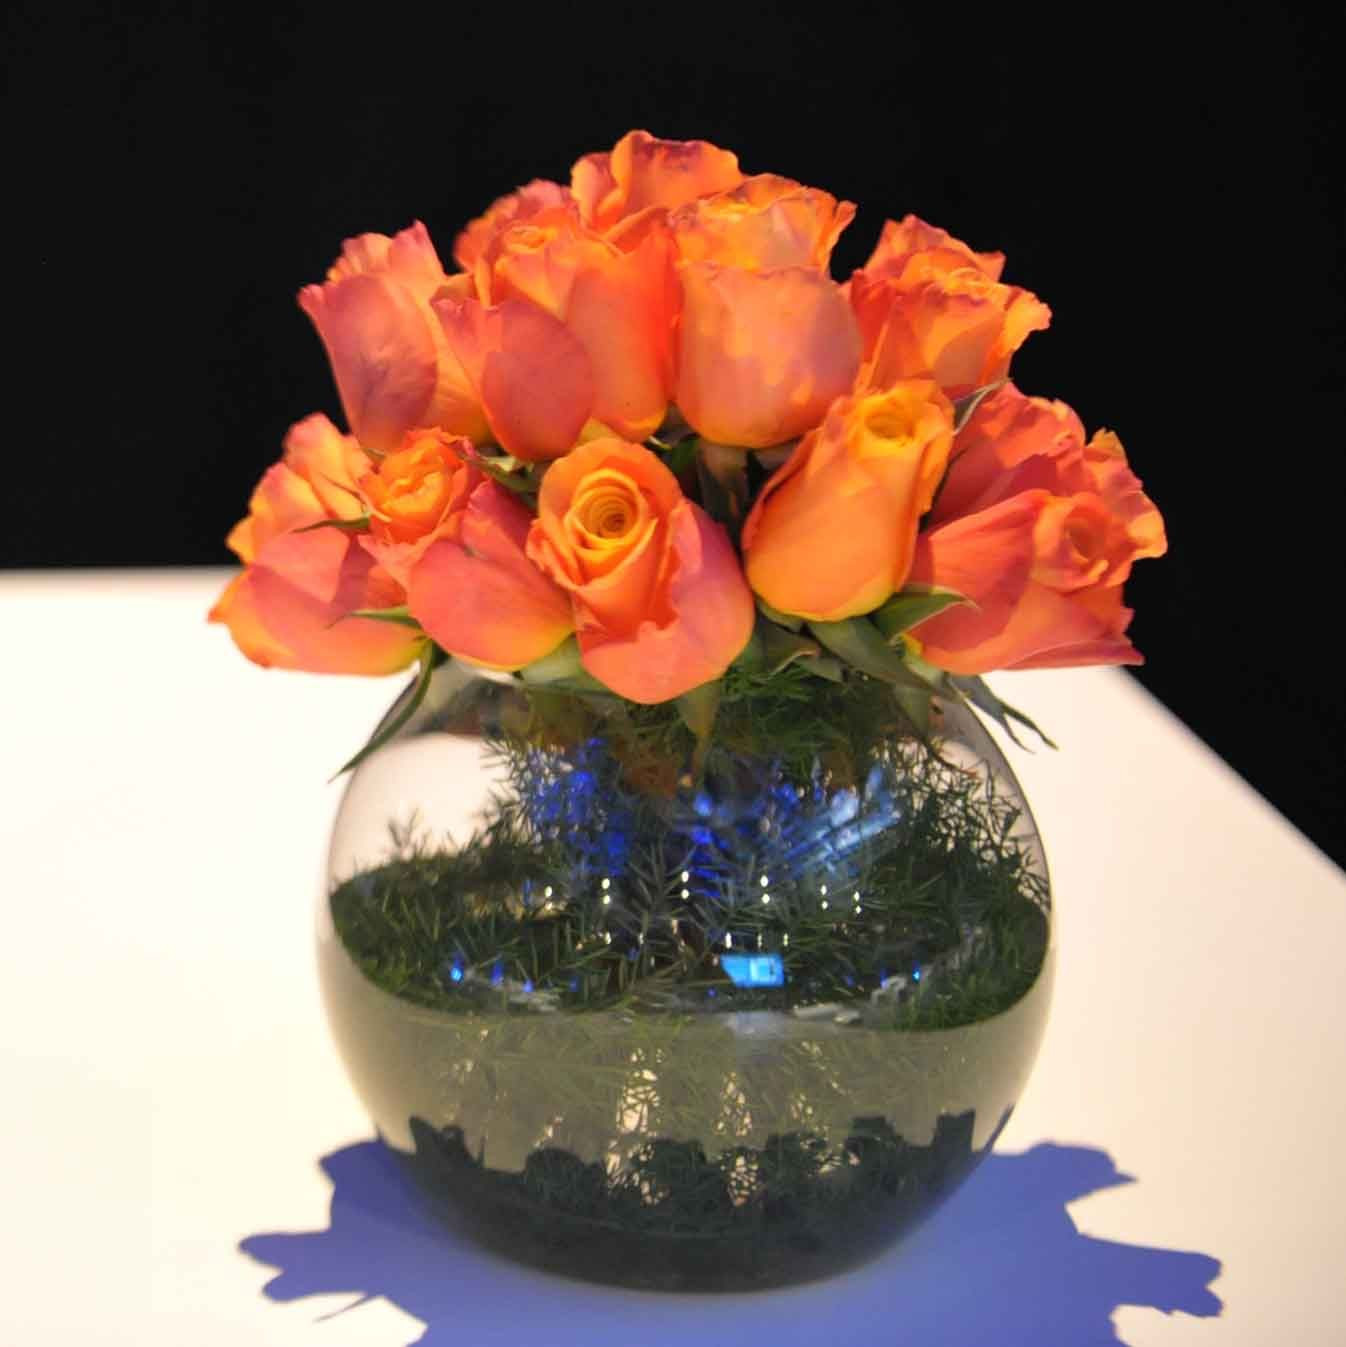 cheap rose bowl vases of 8 od orange rose foliage lined gold fish bowl orange flower with regard to 8 od orange rose foliage lined gold fish bowl